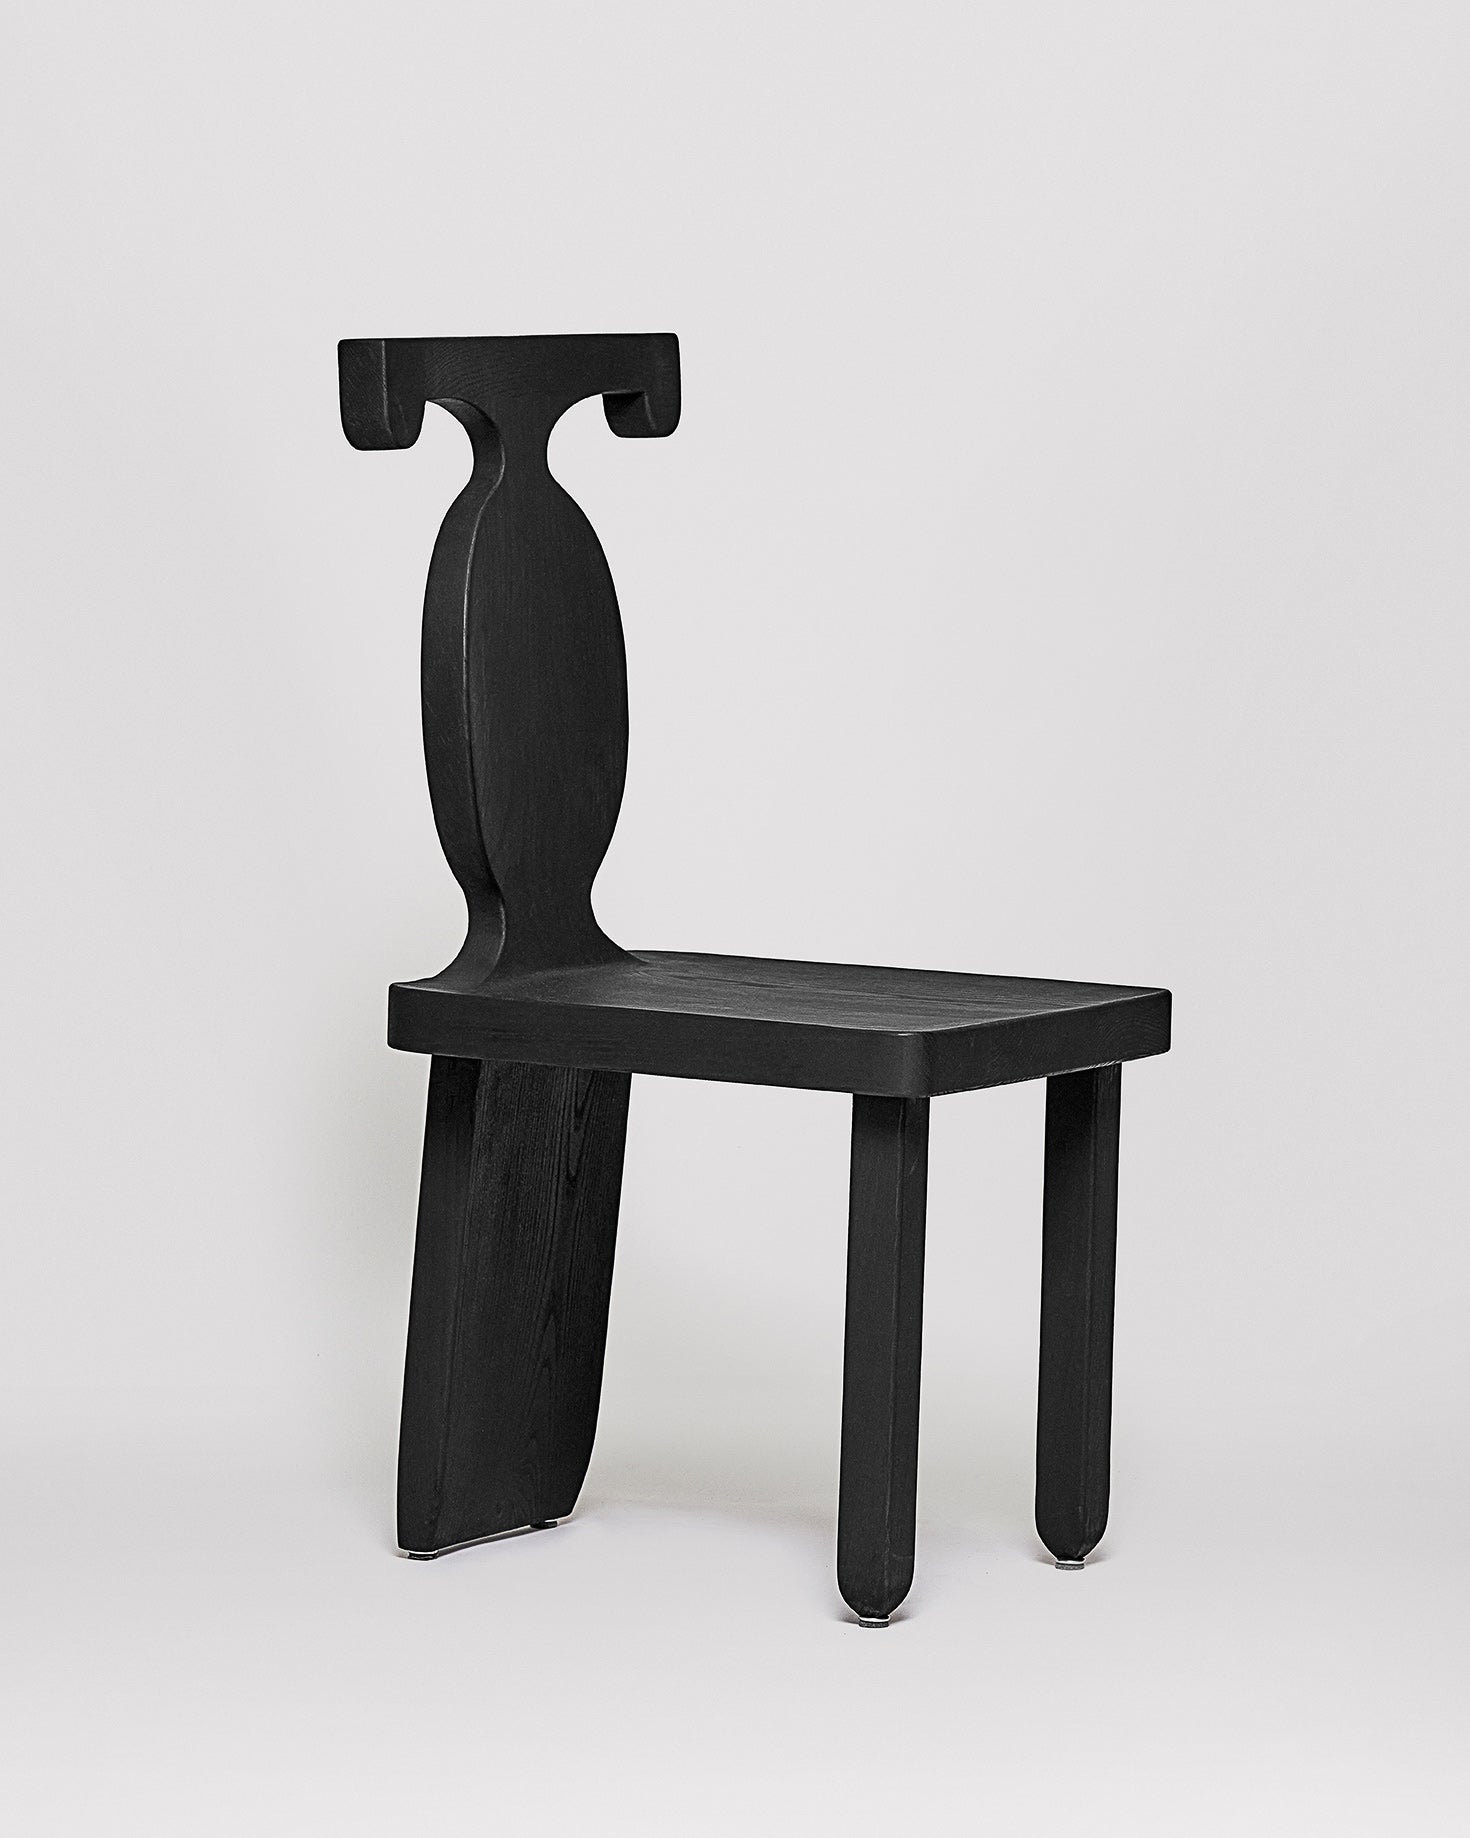 Sculptural African wooden chair in ebonized ash